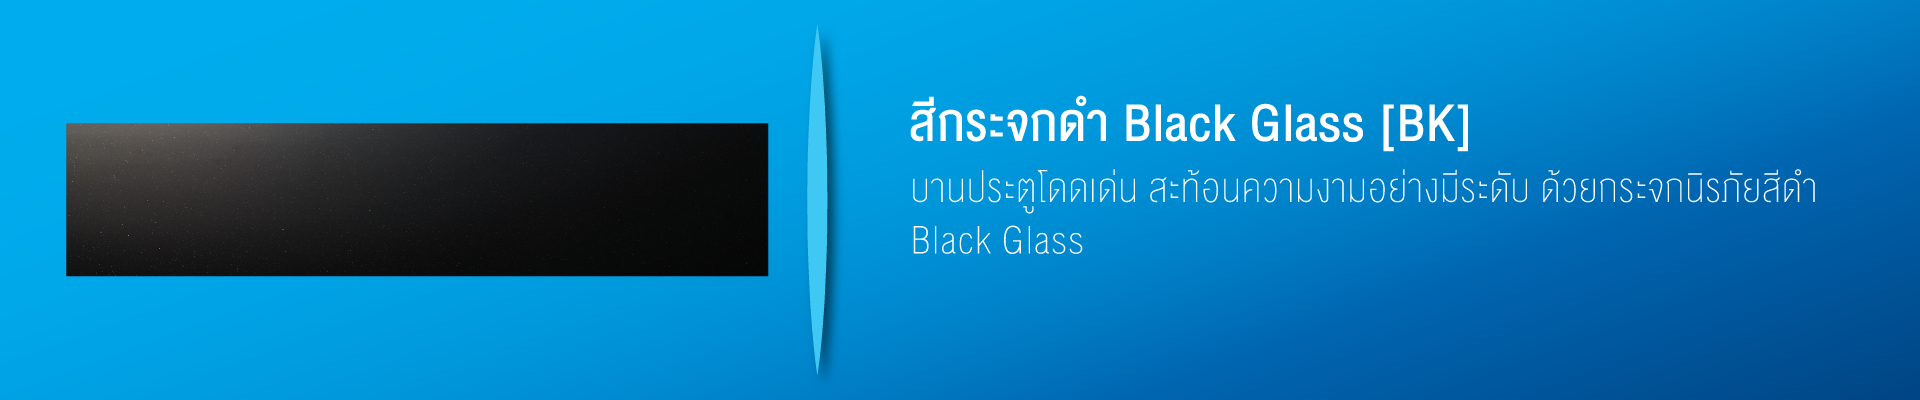 REF---website-spec-patern---1920x400-Black-Glass